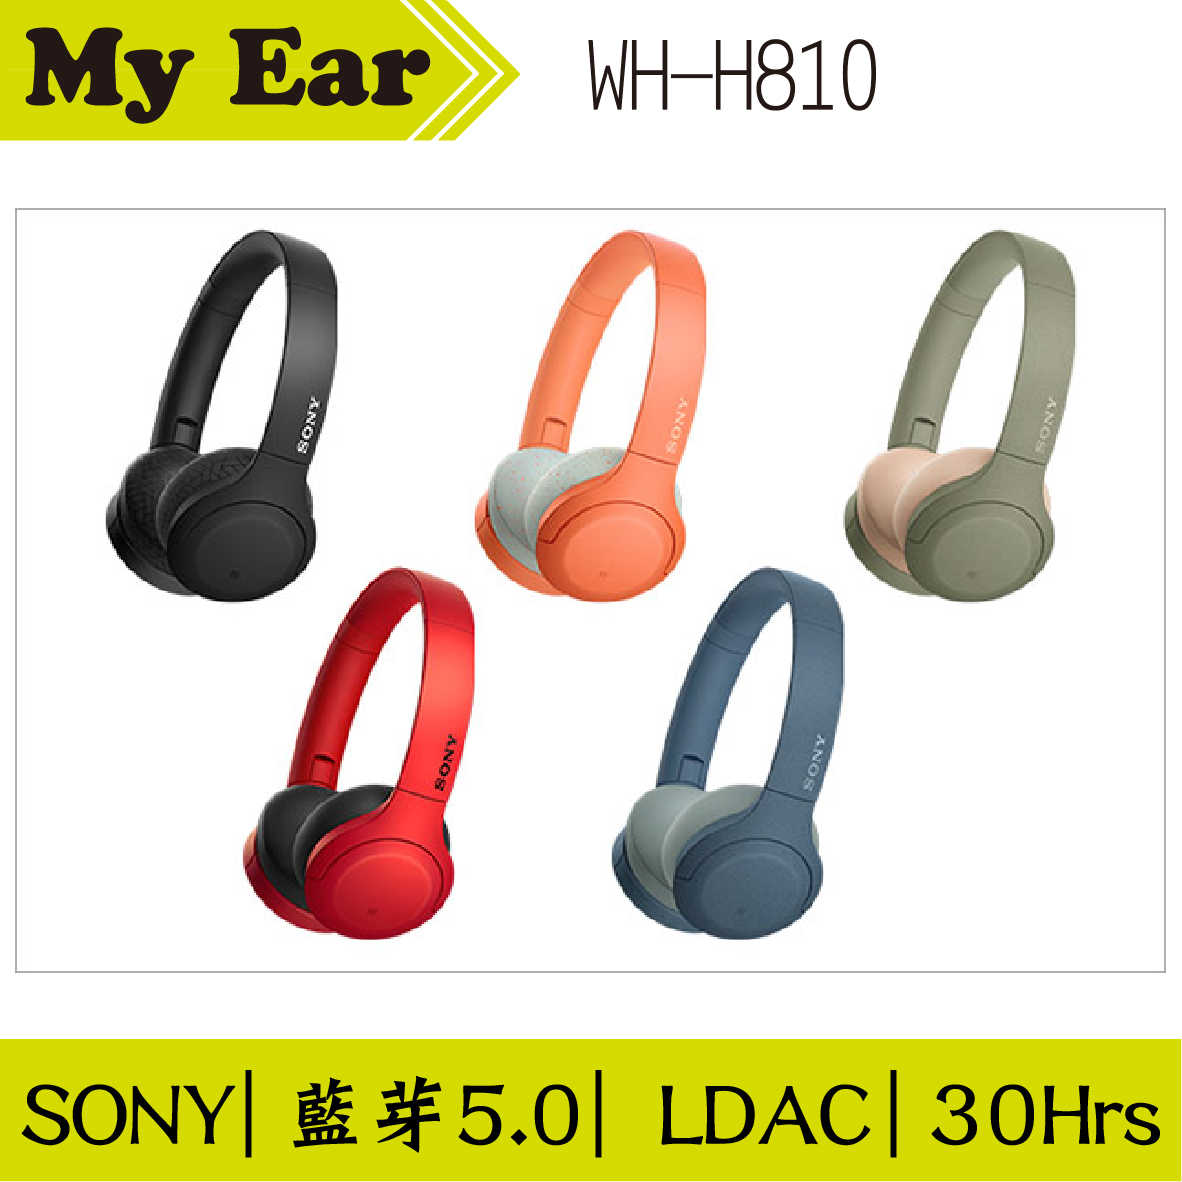 SONY WH-H810 h.ear 藍芽 耳罩式 耳機 多色可選 | My Ear 耳機專門店